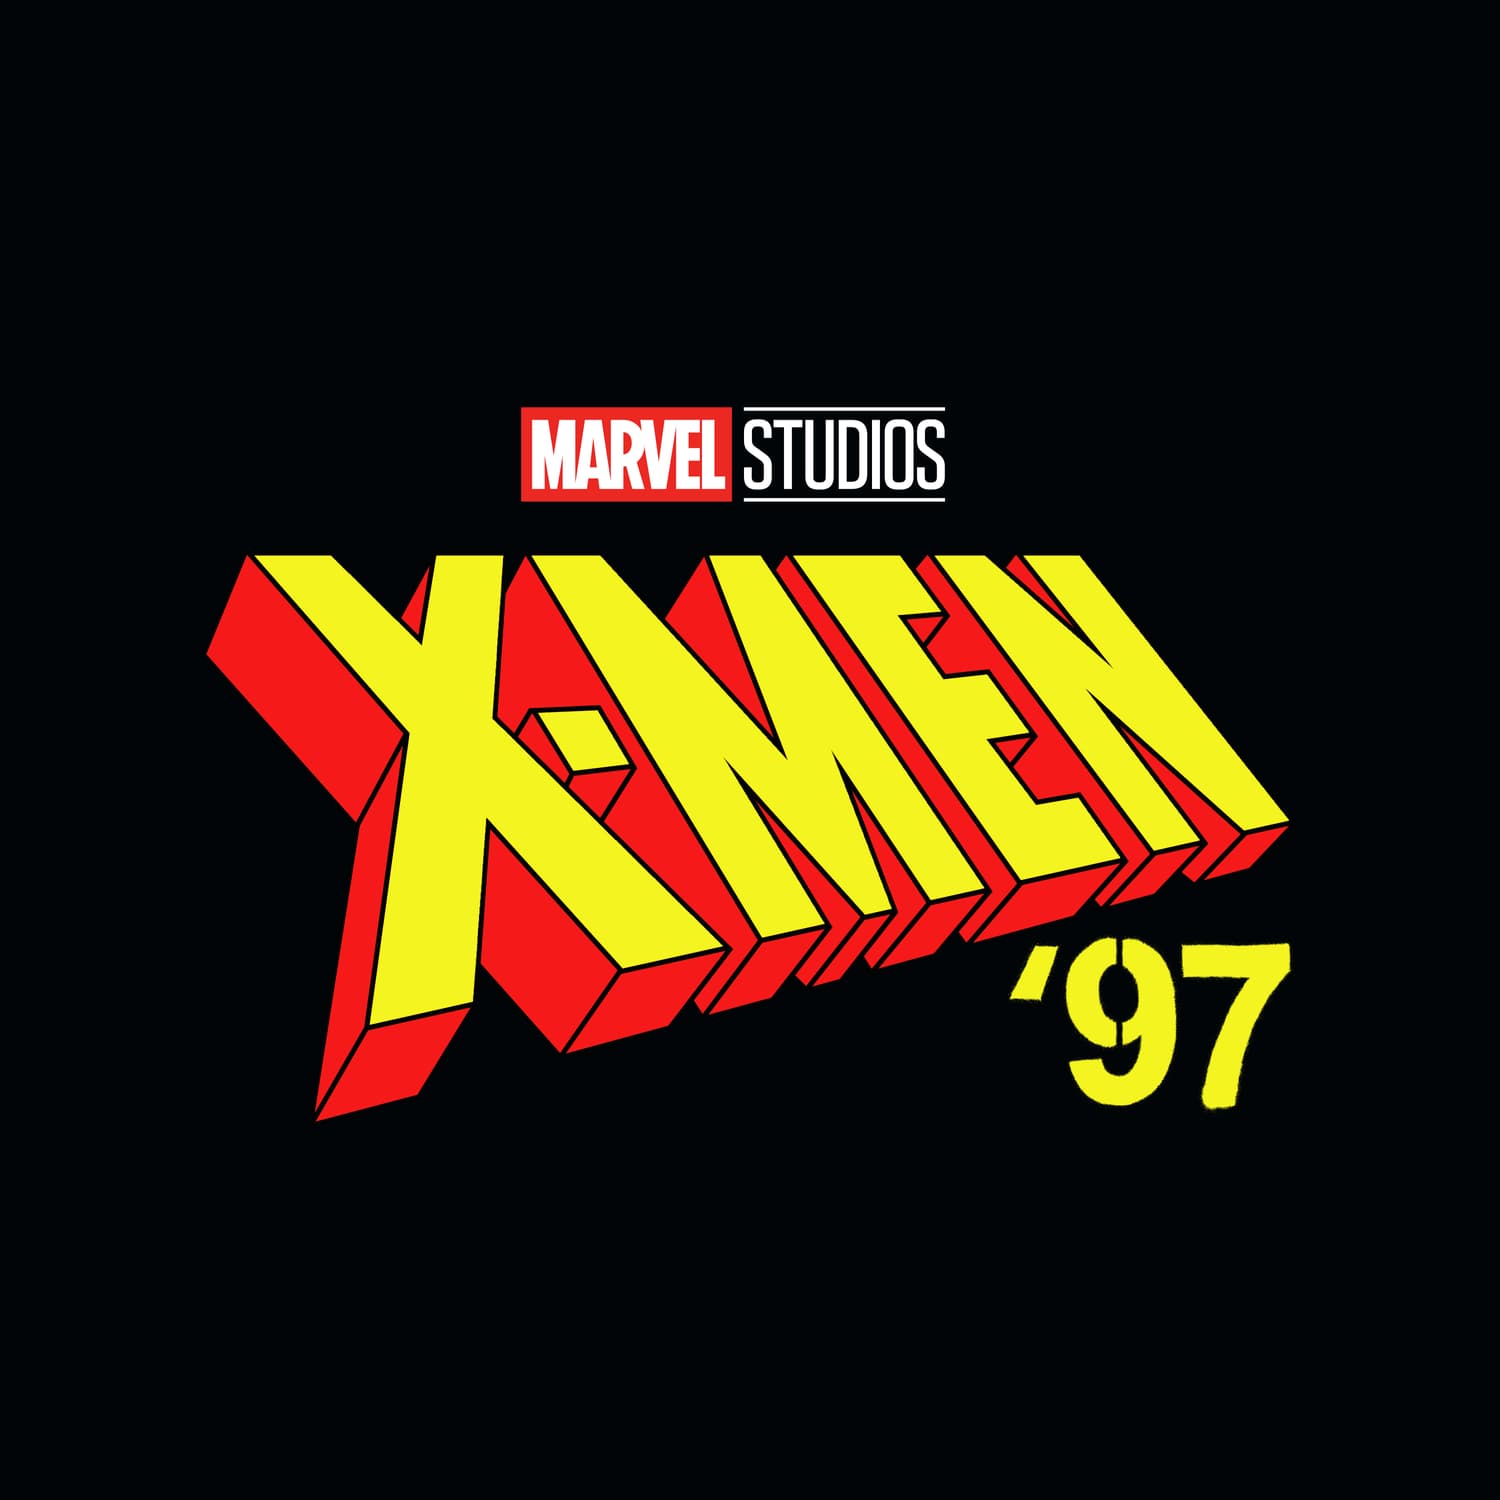 Marvel Studios' X-Men '97